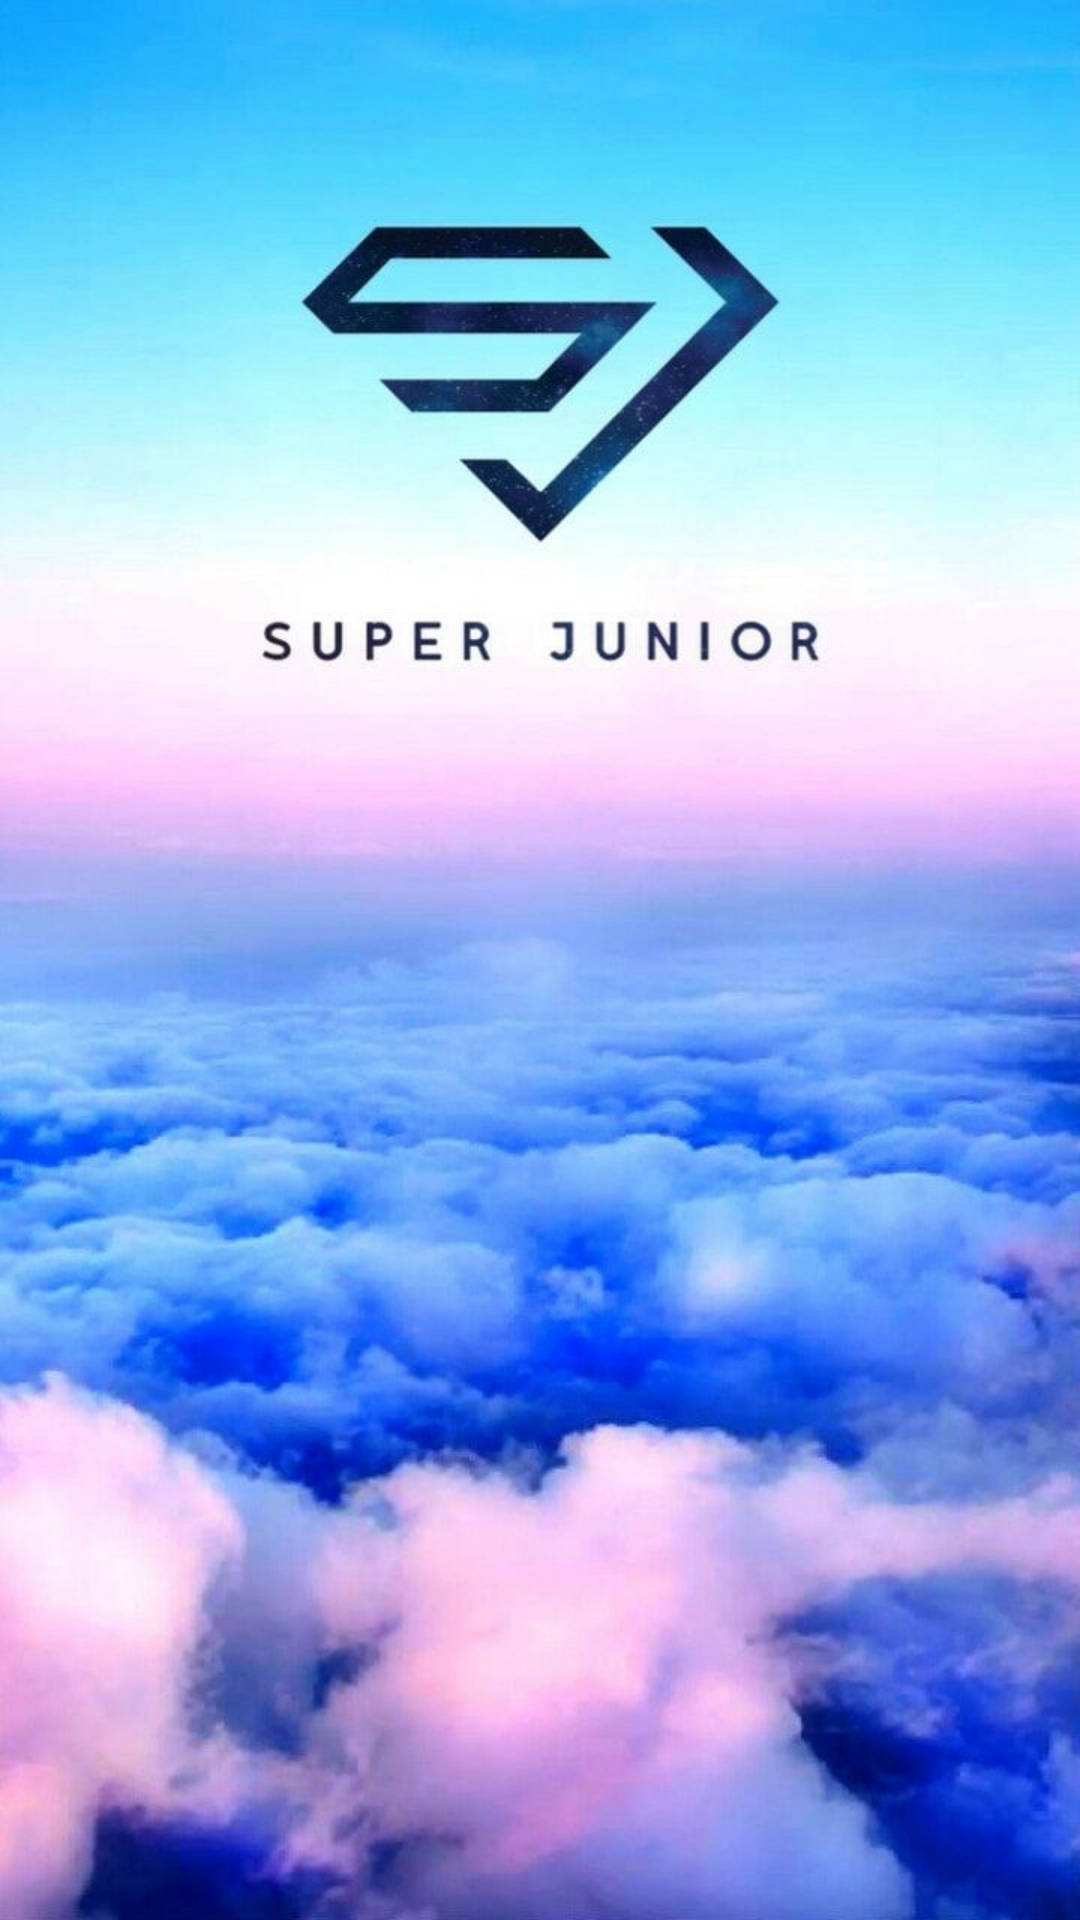 Logode Super Junior Con Nubes Fondo de pantalla